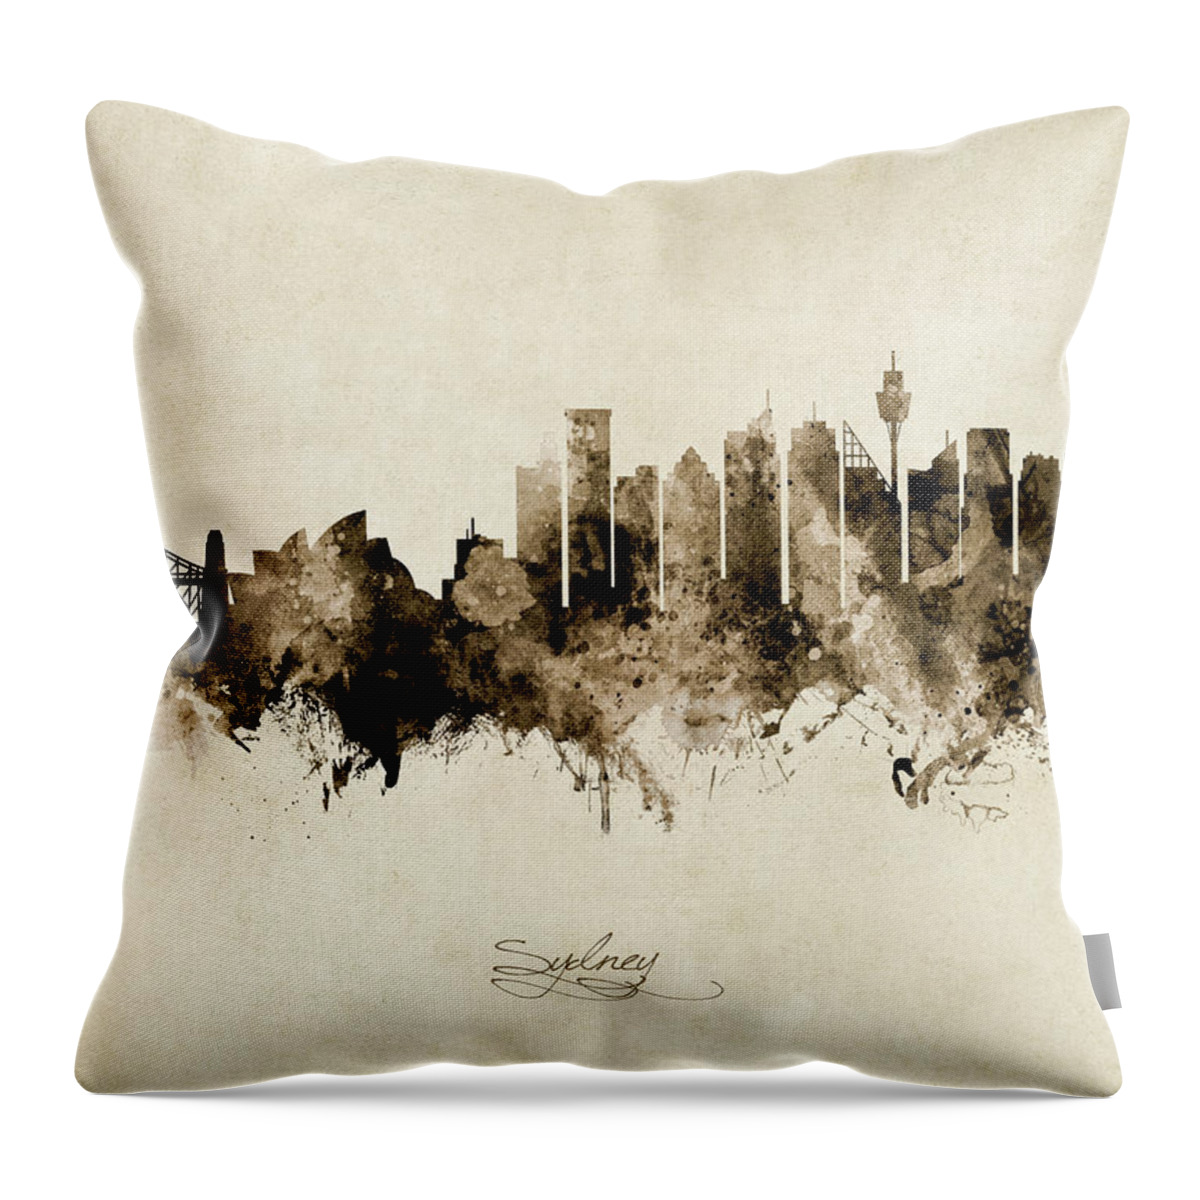 Sydney Throw Pillow featuring the digital art Sydney Australia Skyline #20 by Michael Tompsett